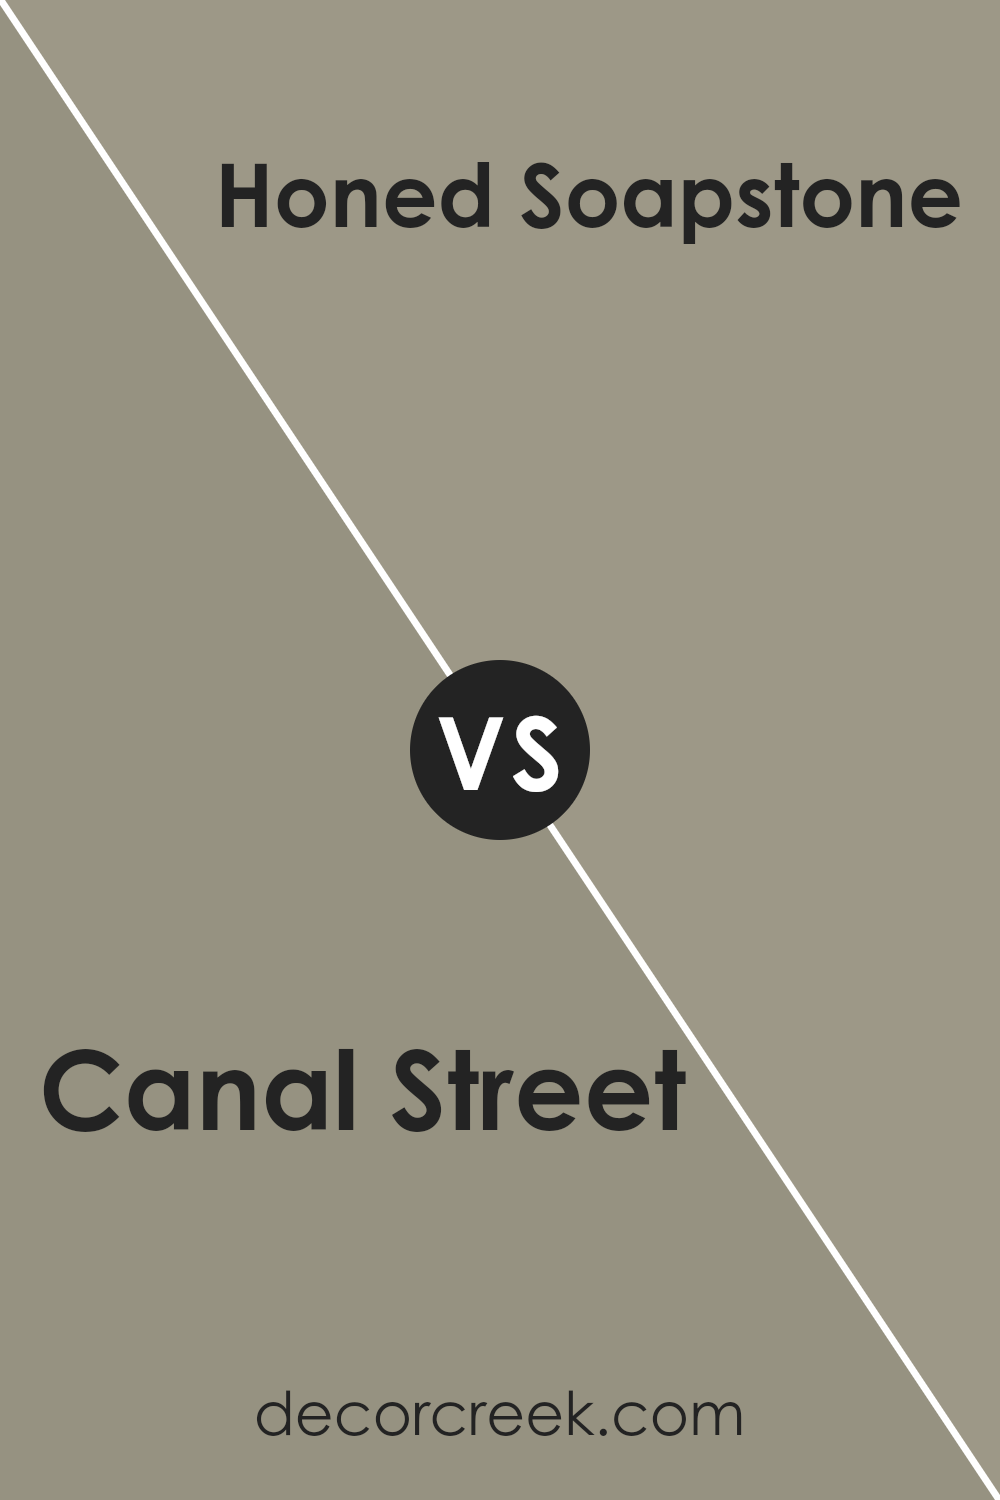 canal_street_sw_9523_vs_honed_soapstone_sw_9126